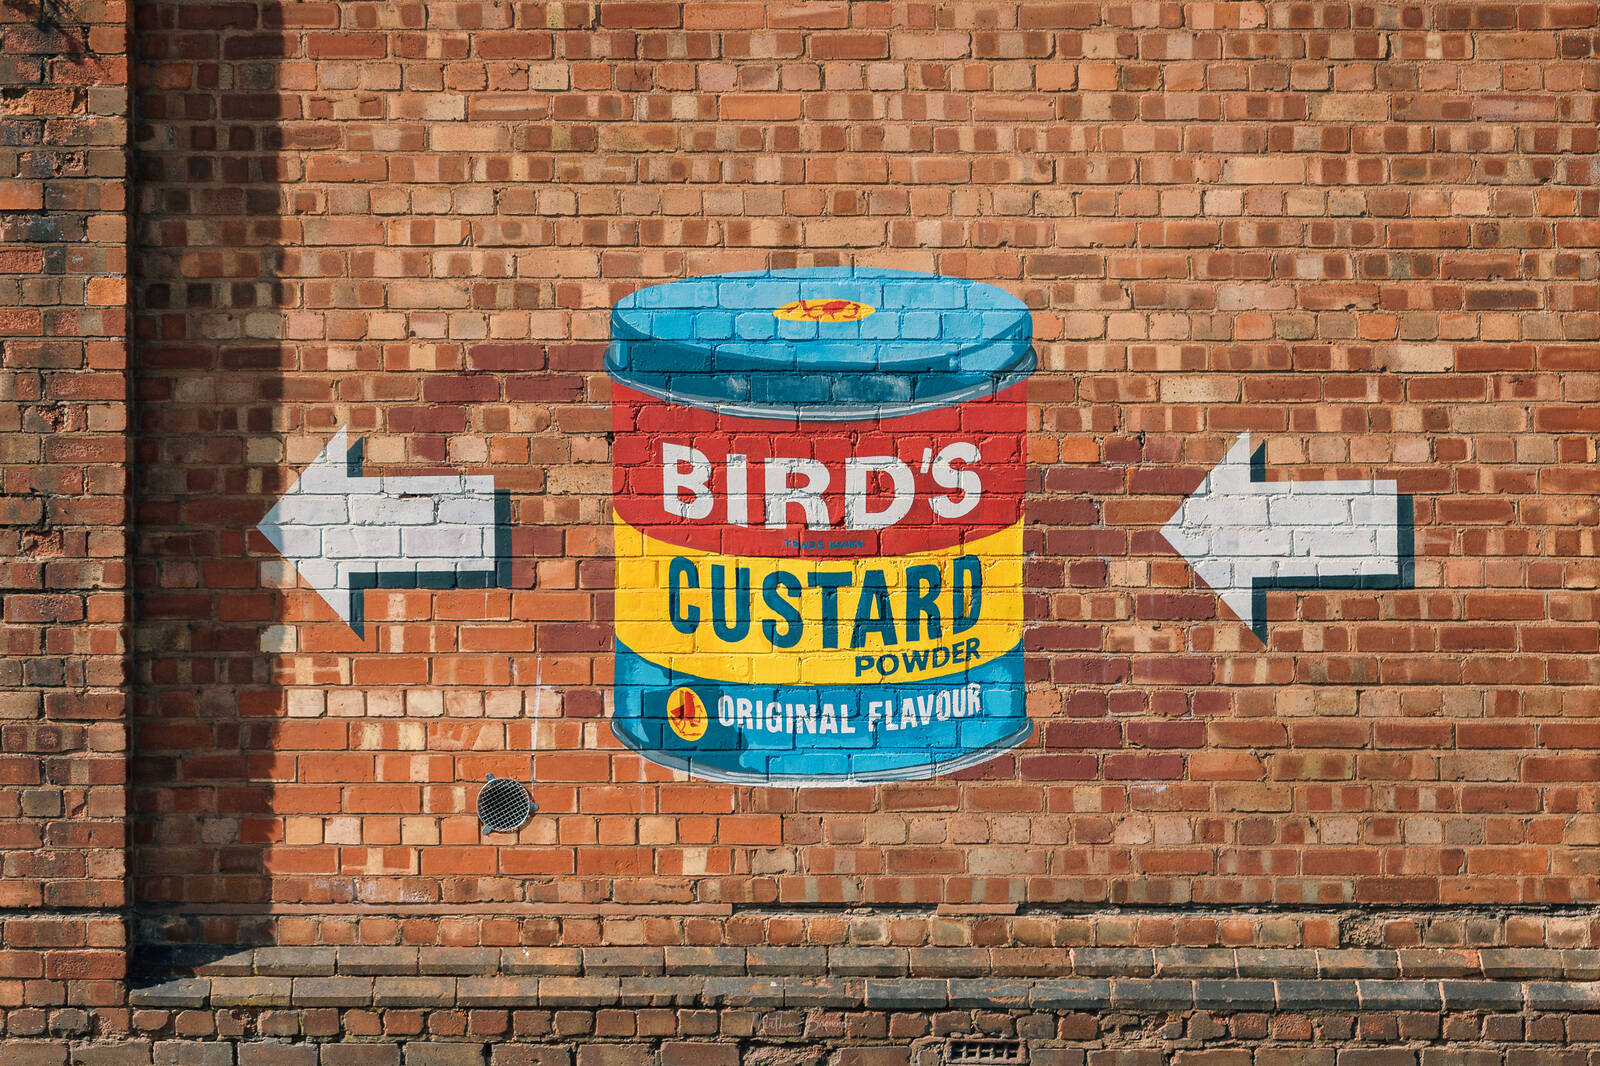 Image of Birds Custard Street Art by Mathew Browne